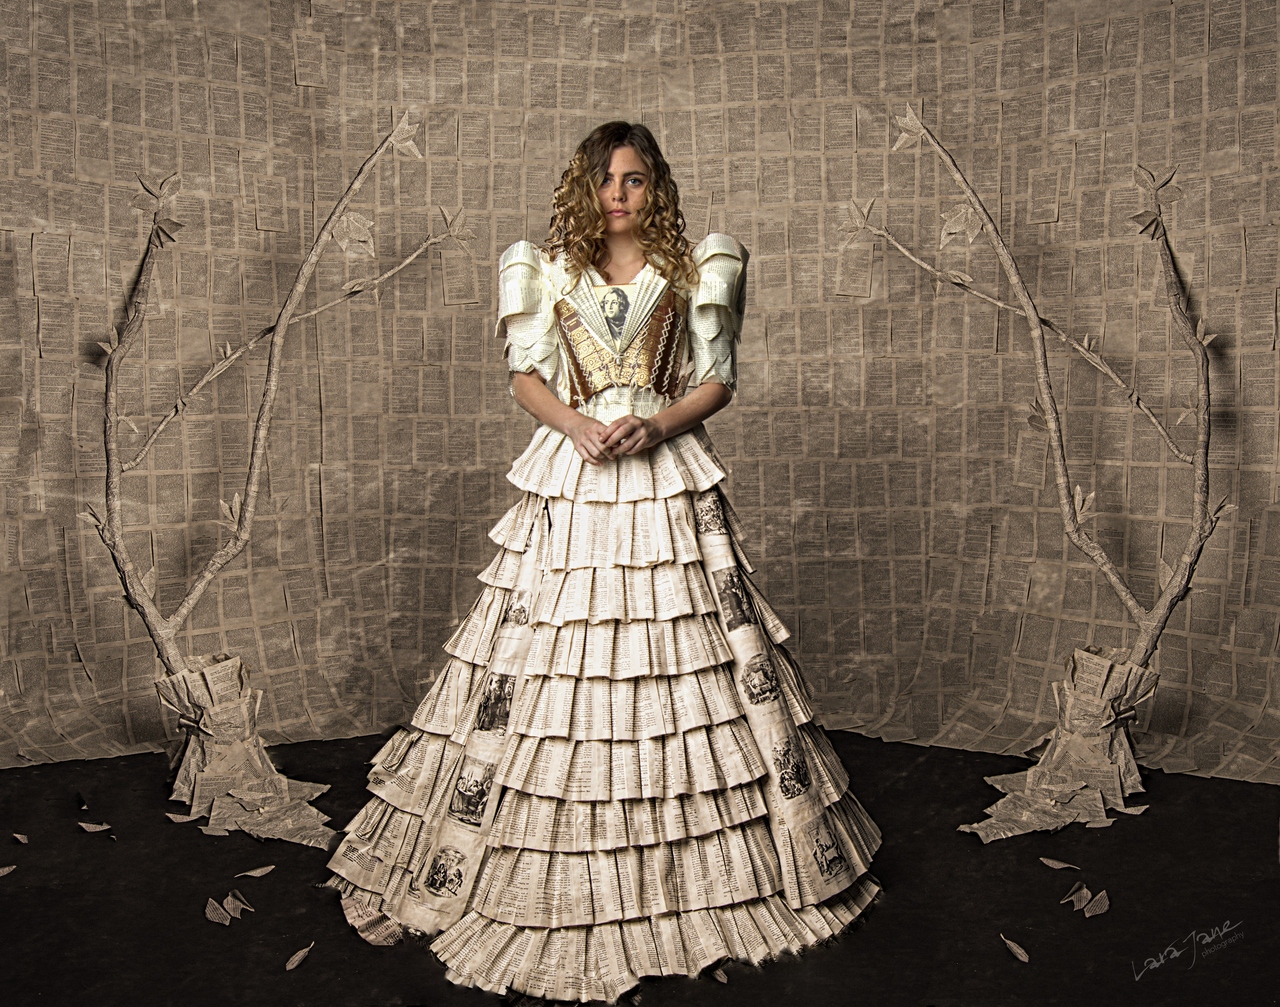 The Girl in the Charles Dickens Dress by Larissa Salton | Clayton Utz Art Award 2020 Finalists | Lethbridge Gallery